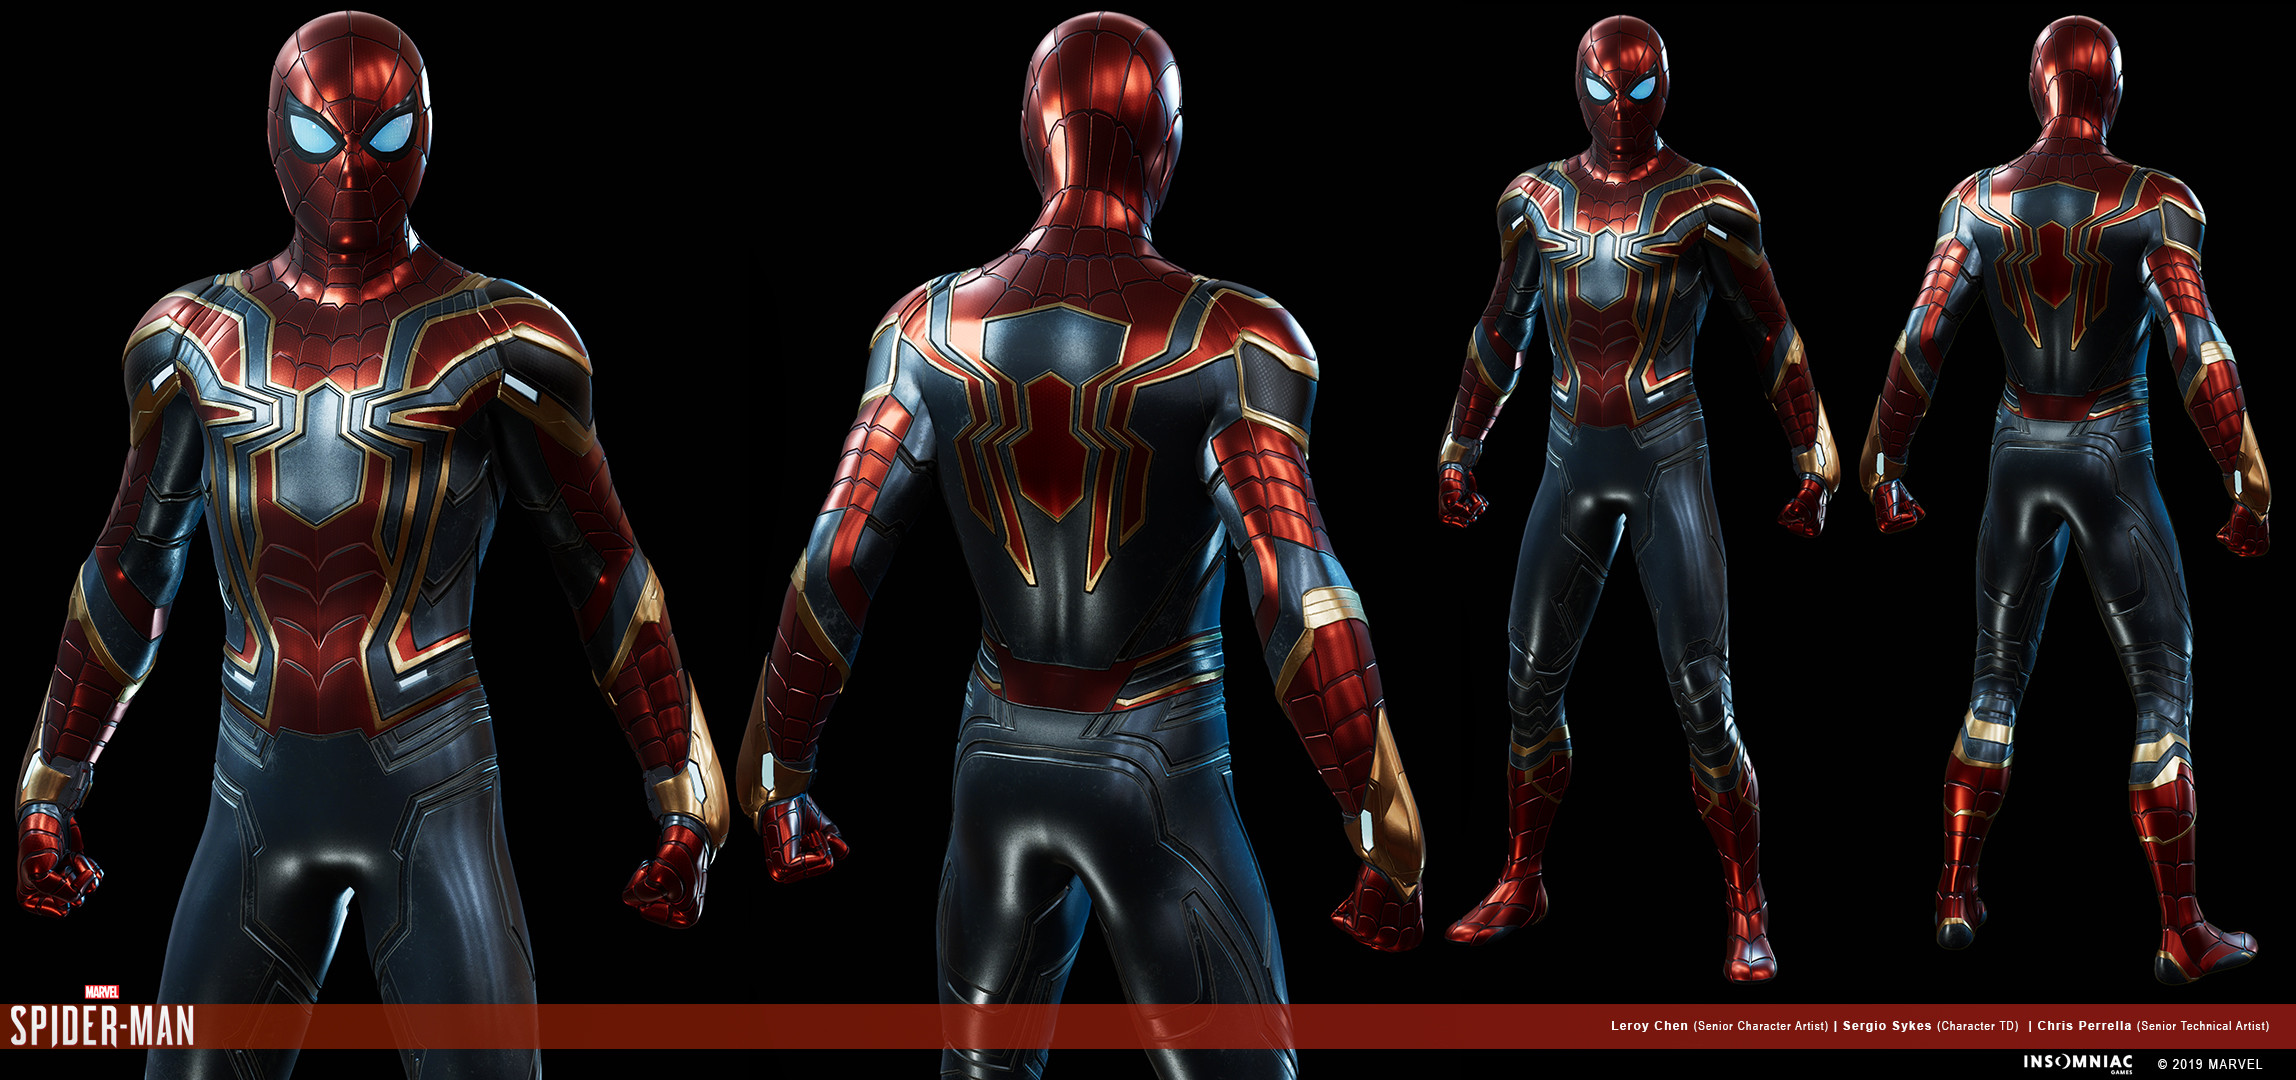 Leroy Chen Marvels Spider Man Iron Spider Suit Avengers Infinity War